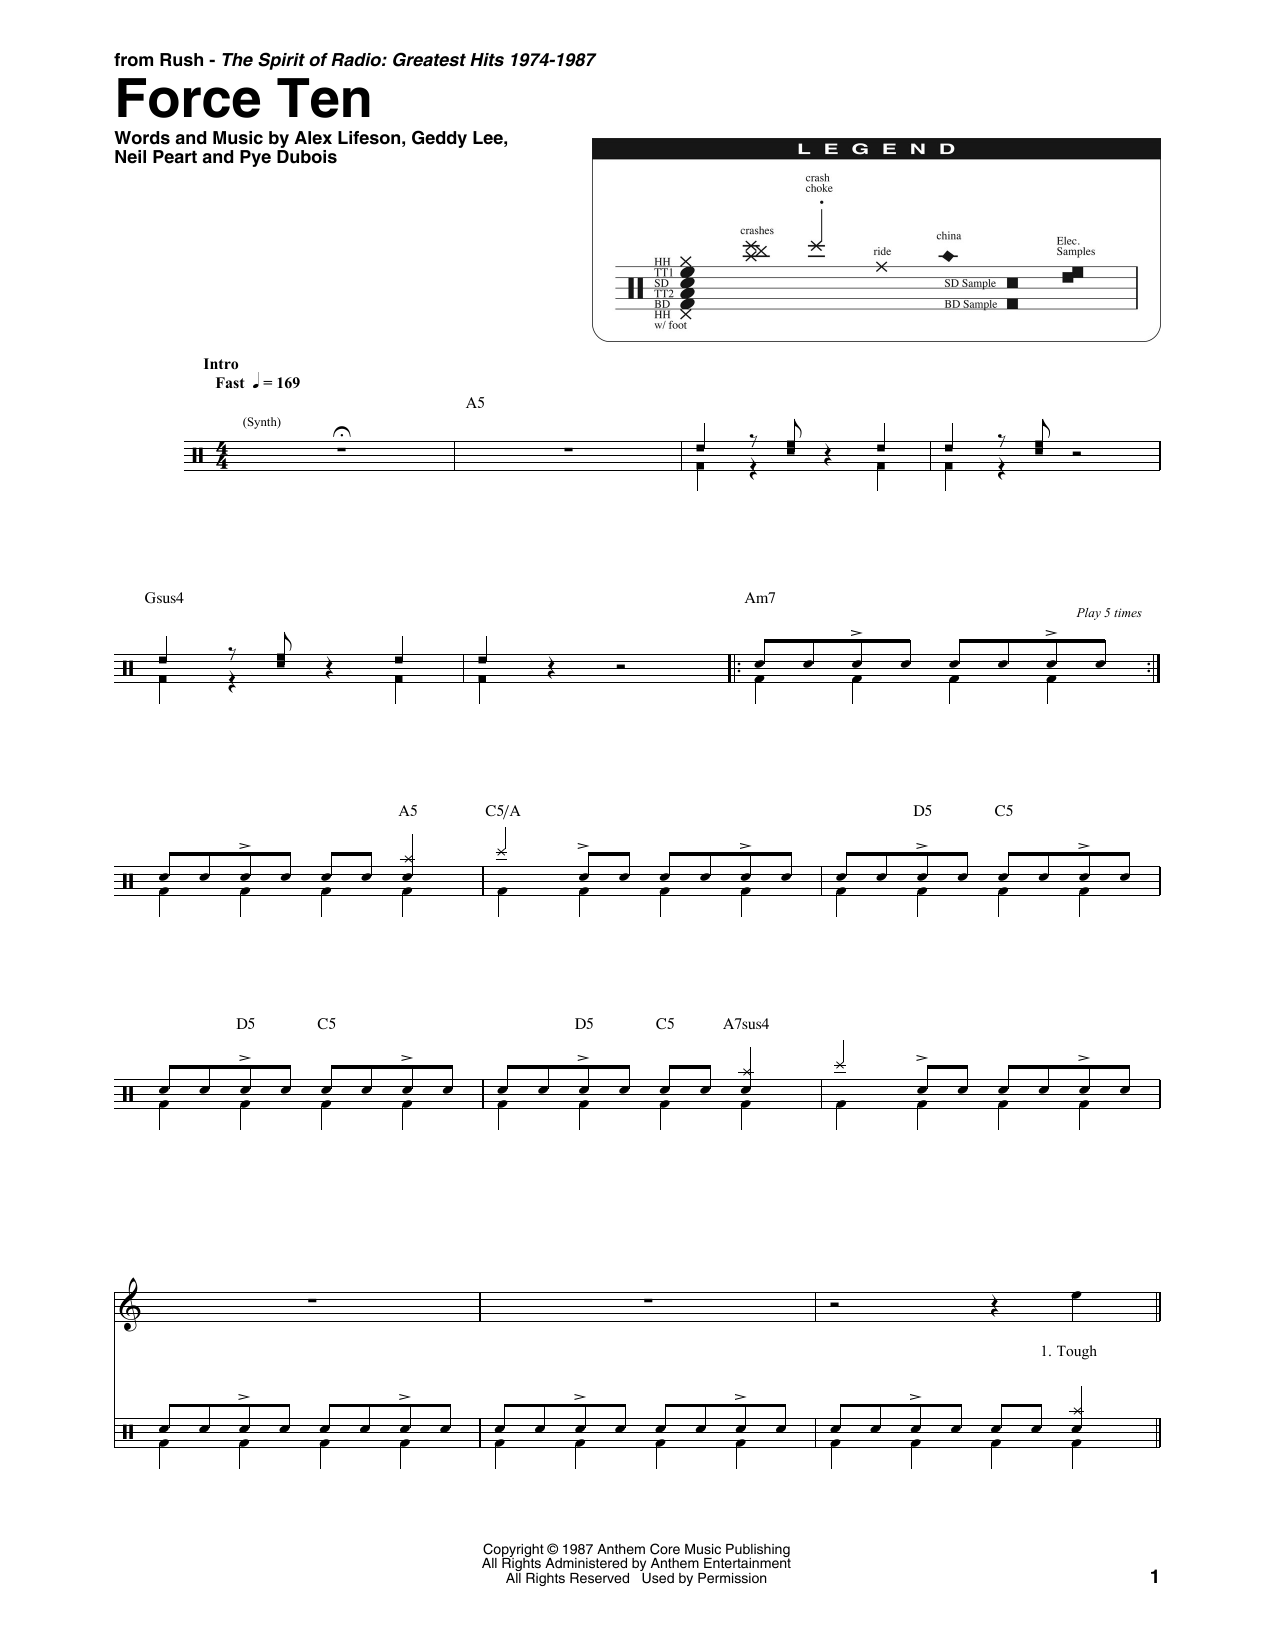 Rush Force Ten Sheet Music Notes & Chords for Guitar Tab - Download or Print PDF